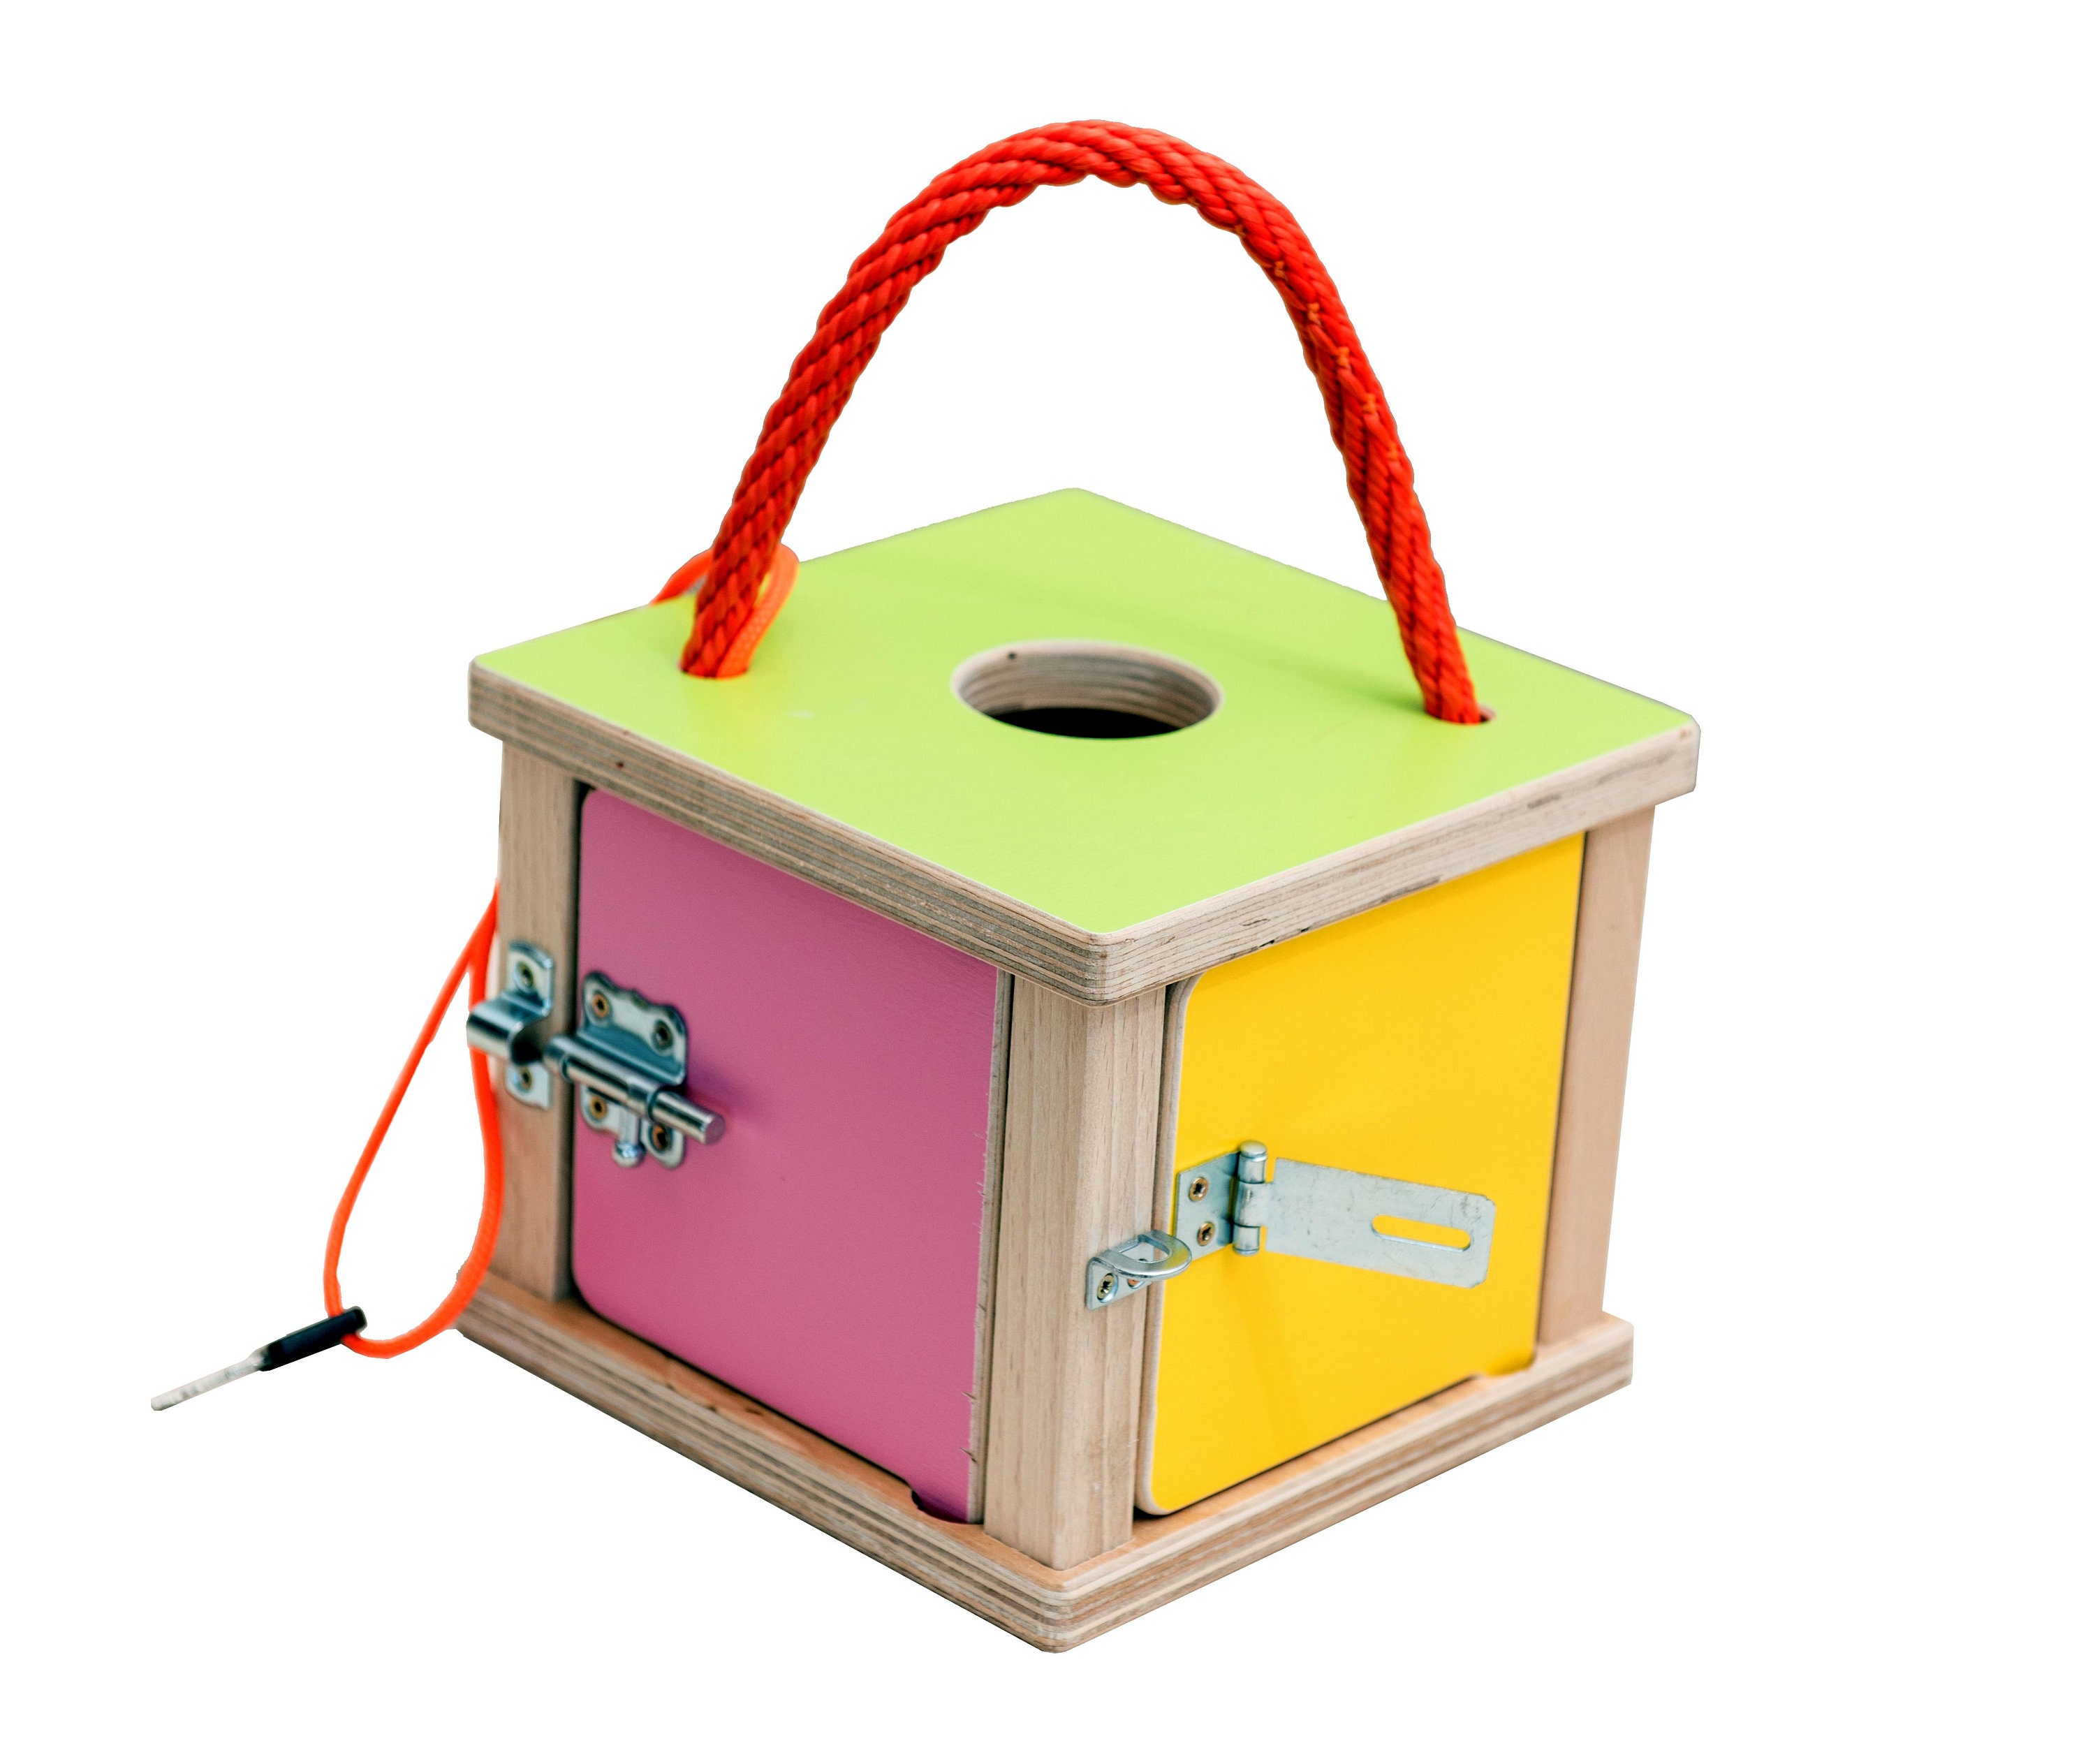 Open Learners Montessori Lock Box — Hooked On Learning